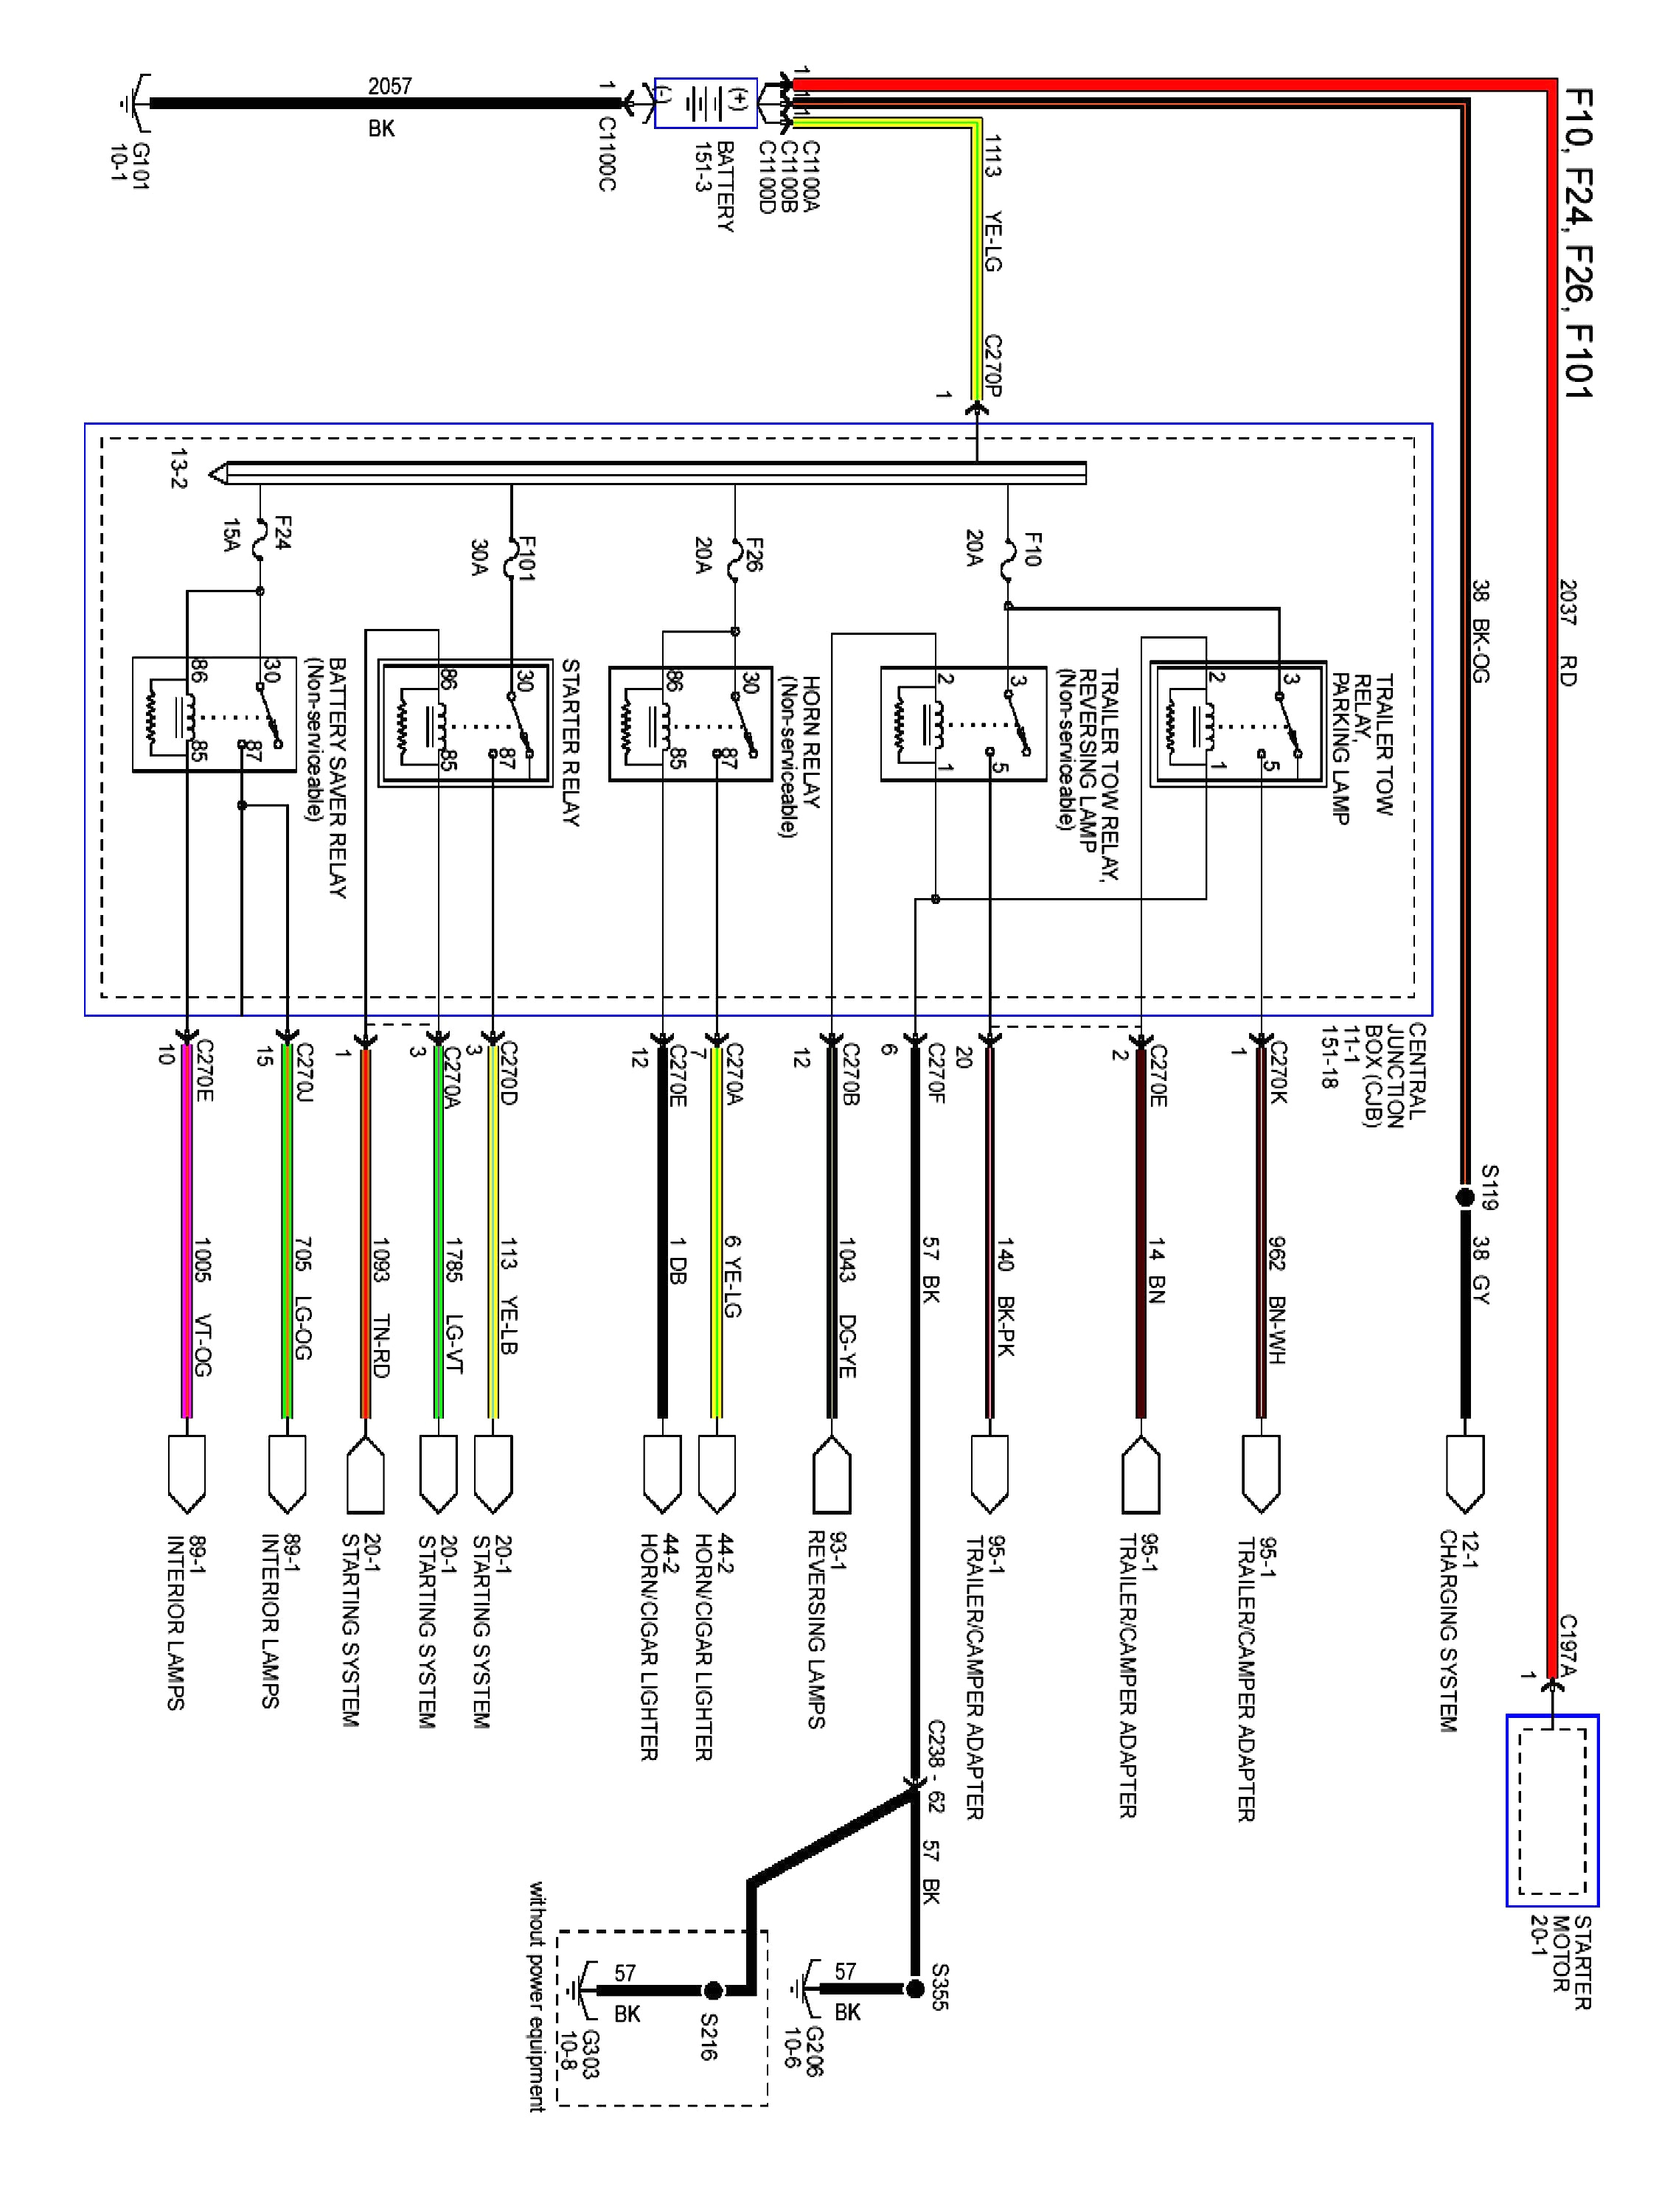 ford gps wiring diagram wiring diagram operations ford 351 wiring harness diagrams wiring diagram expert ford